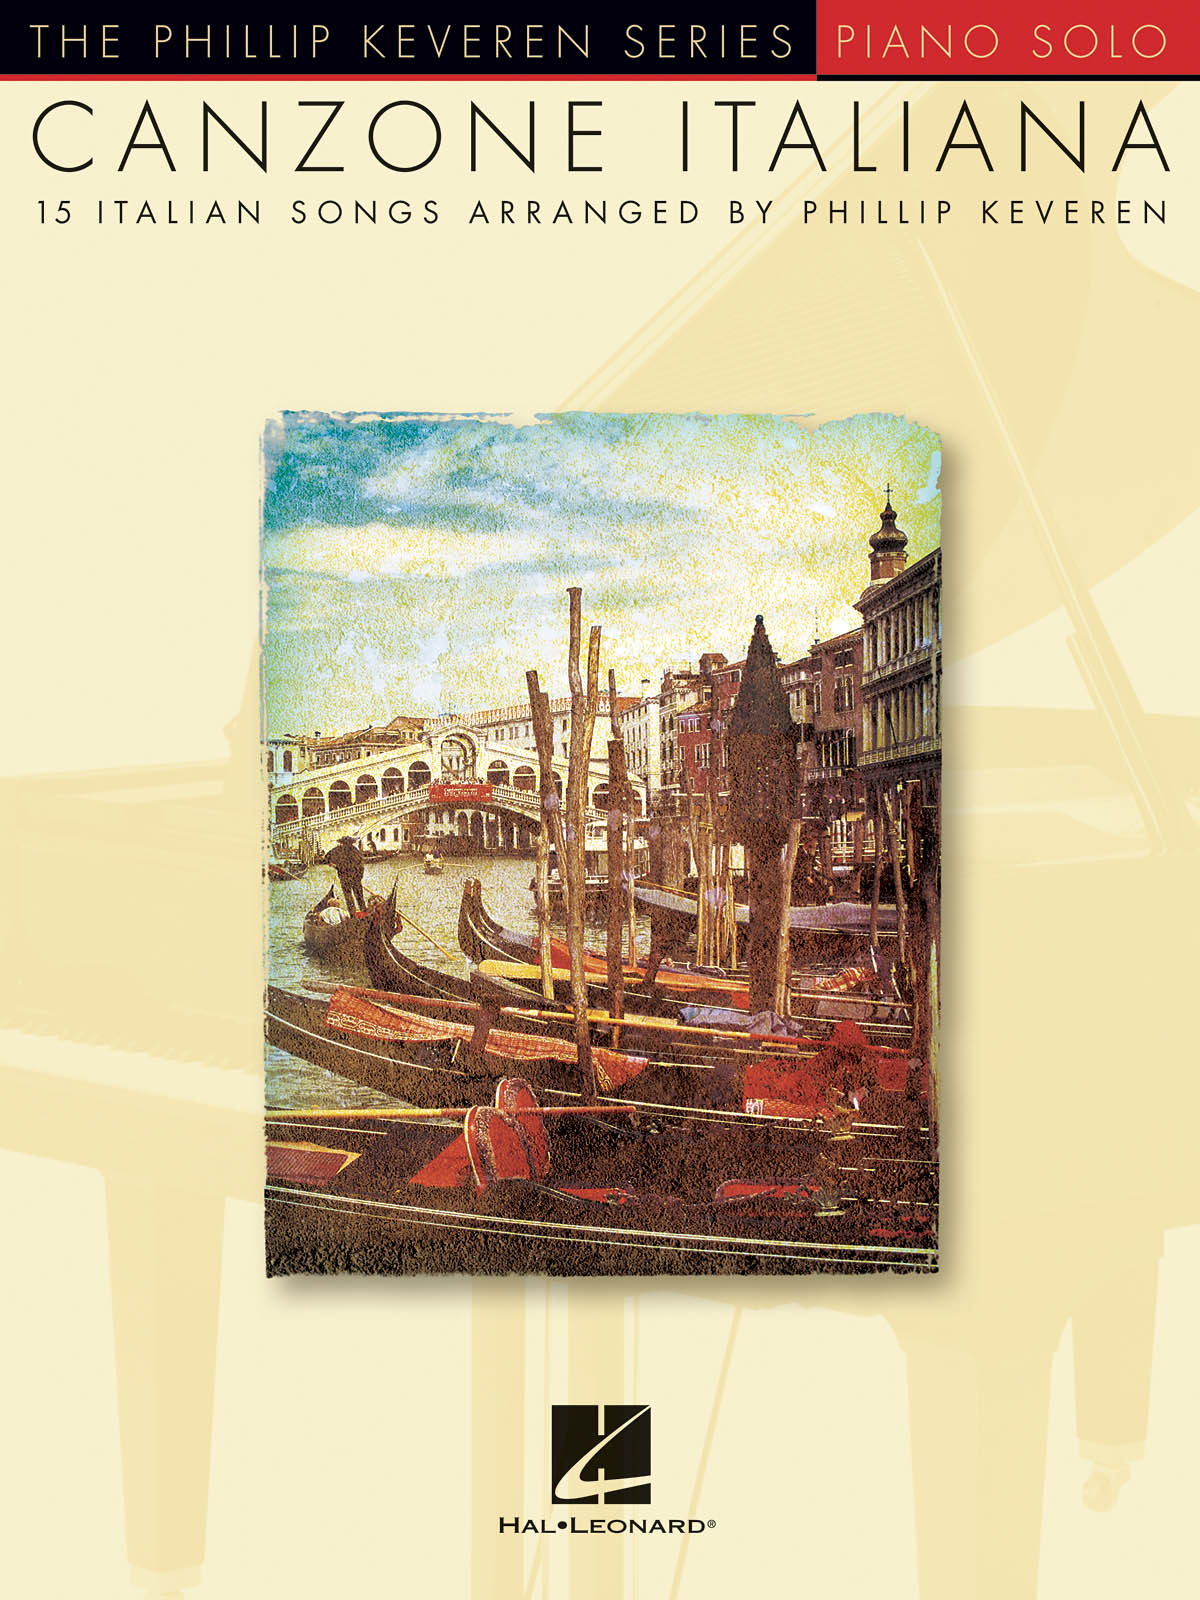 Canzone Italiana - 15 Italian Songs - The Phillip Keveren Series známé písně pro klavír